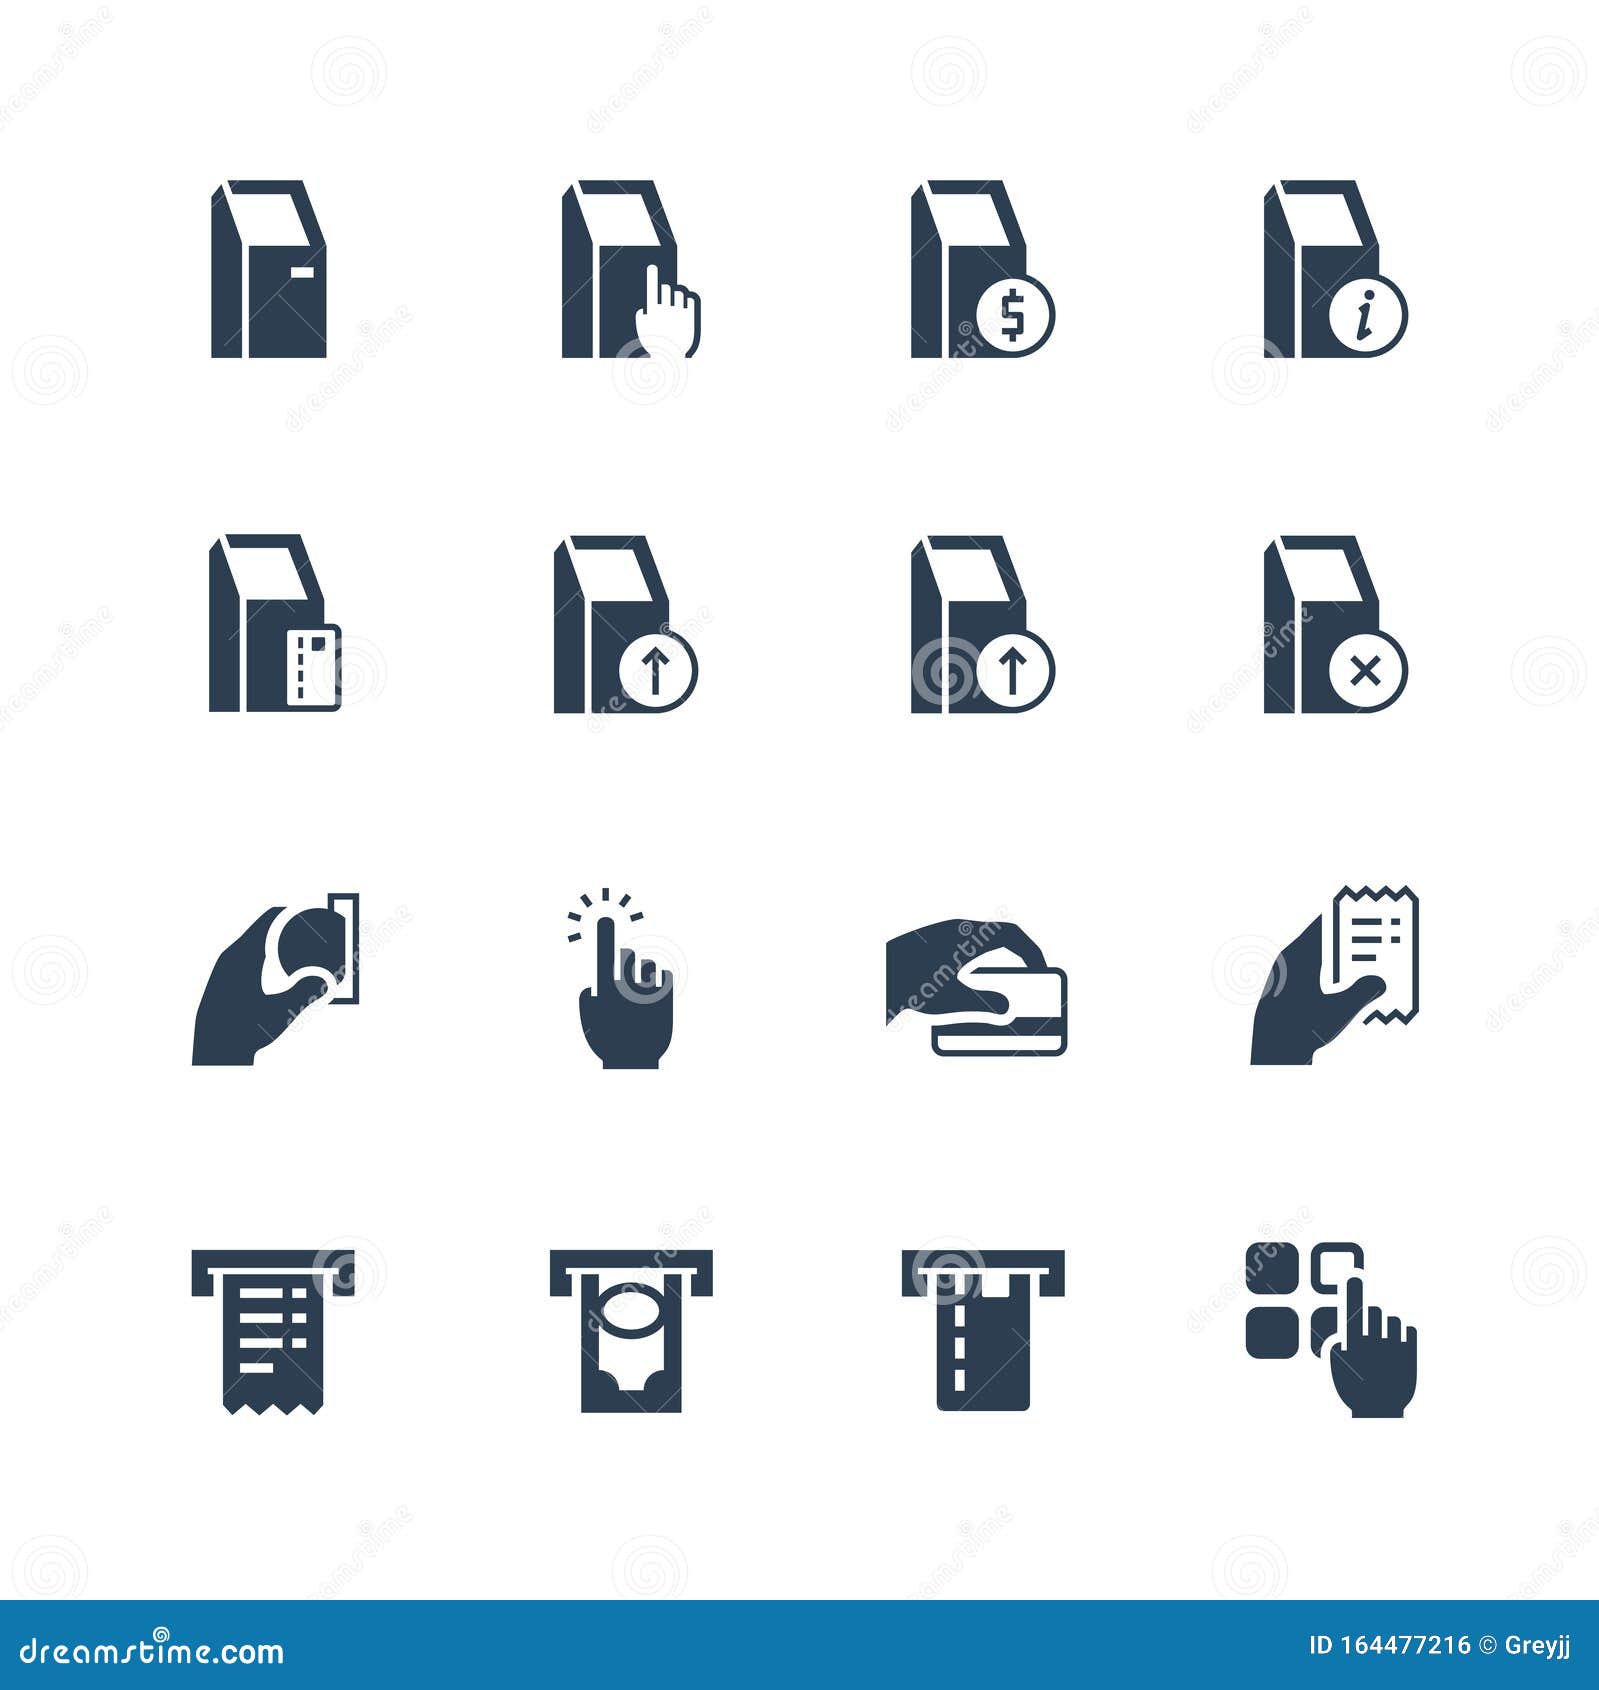 self-service terminals icon set